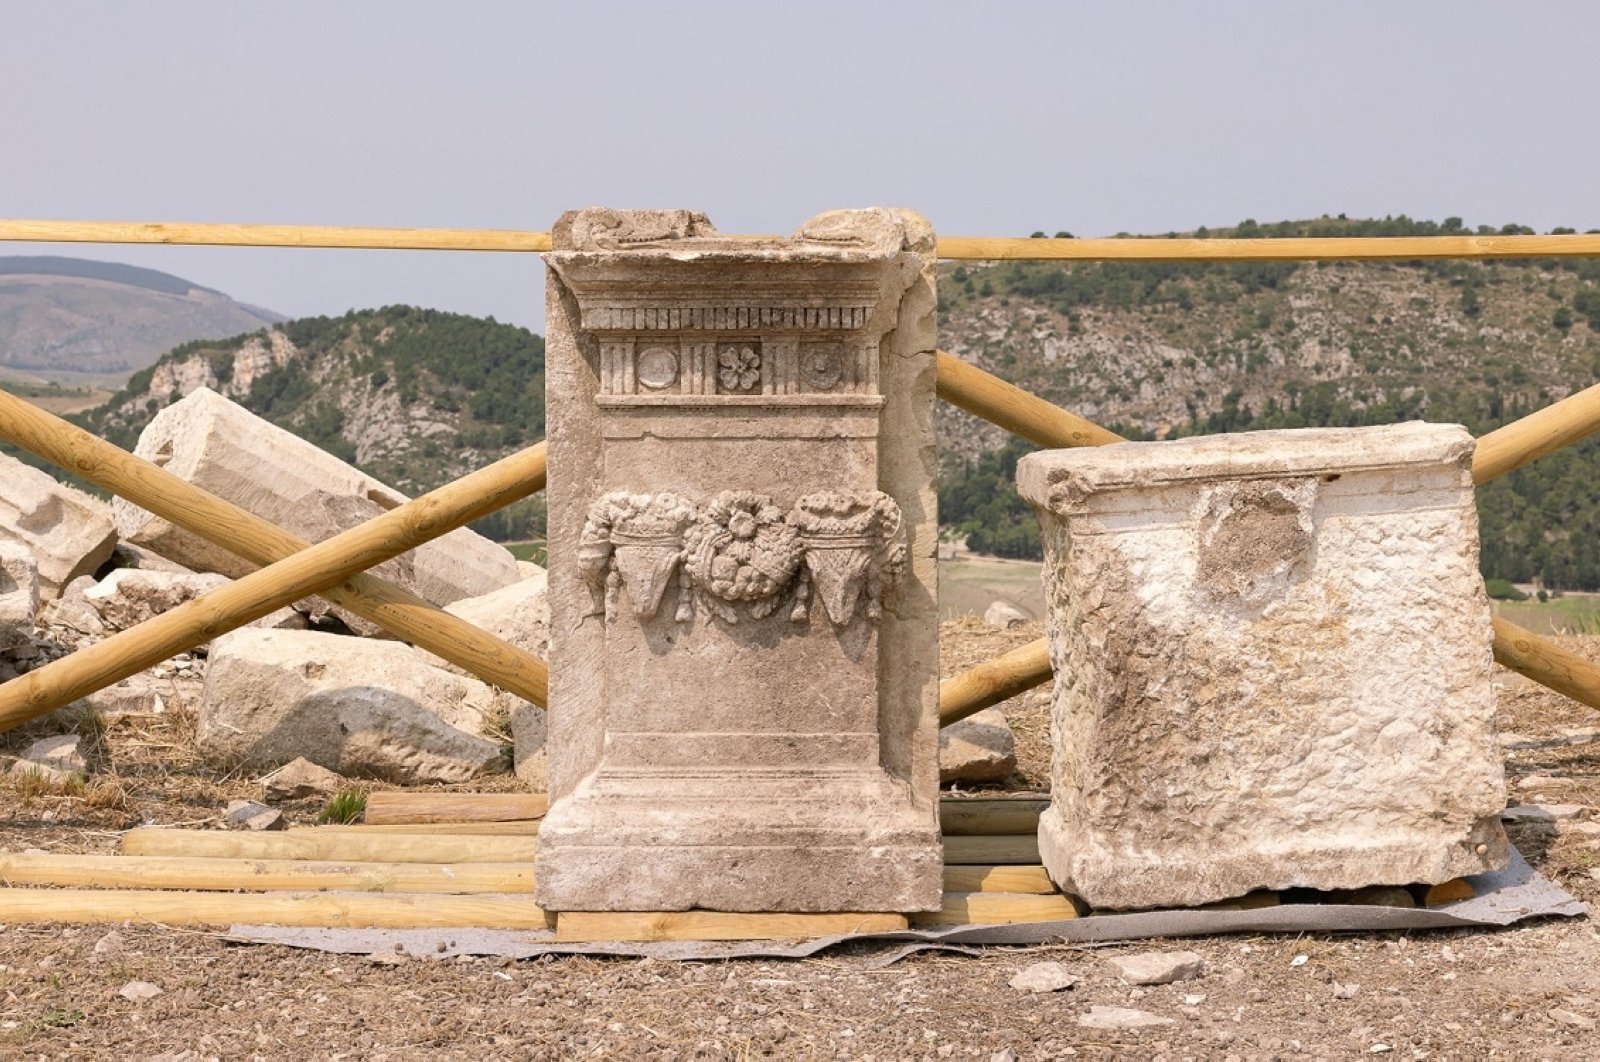 Altar Yunani kuno digali di Segesta, pulau Sisilia, Italia